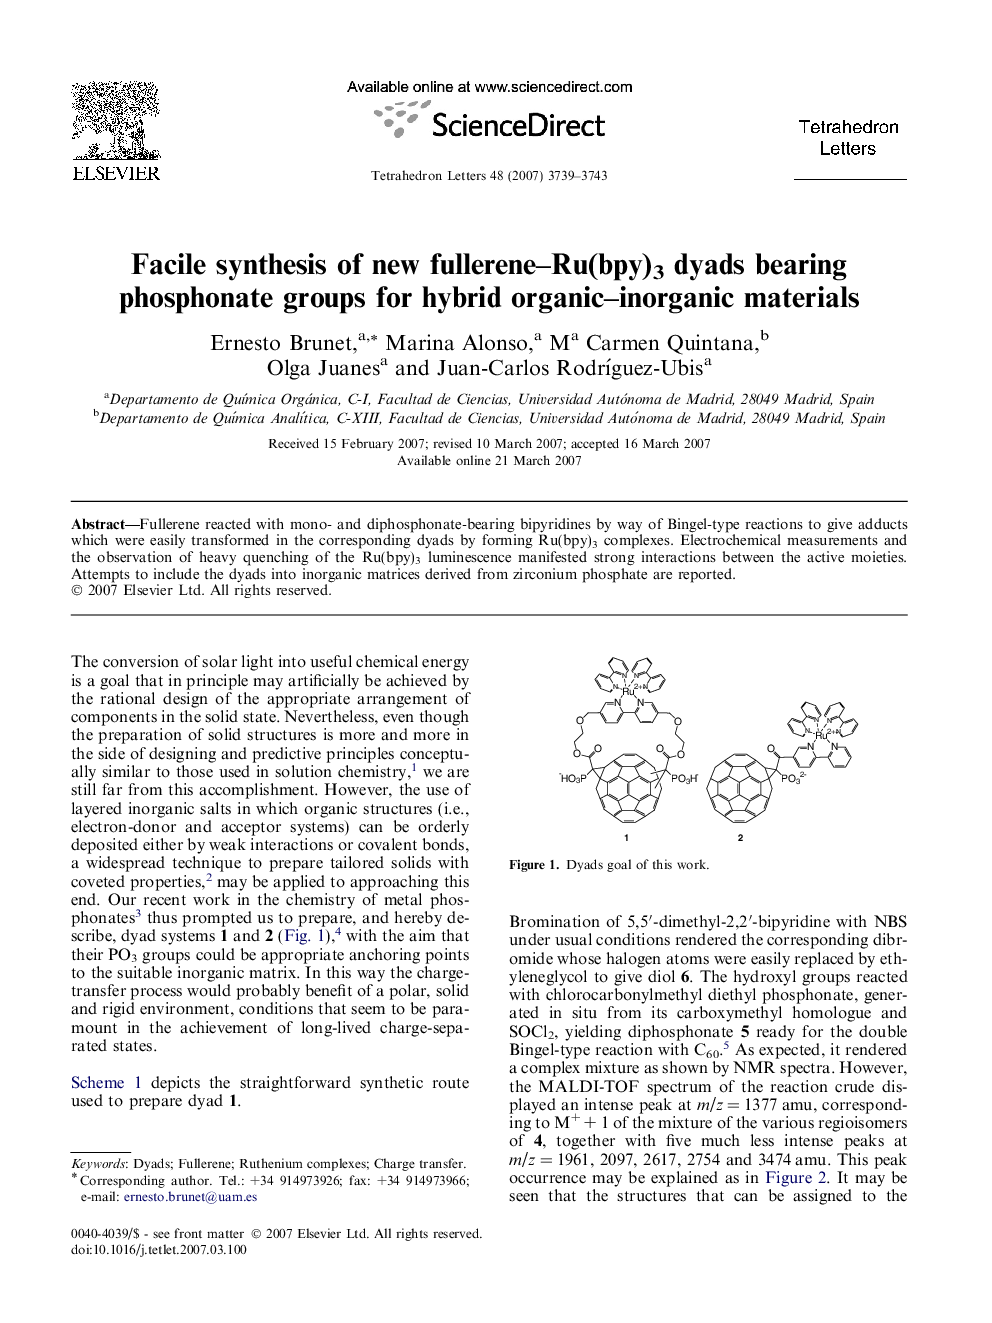 Facile synthesis of new fullerene-Ru(bpy)3 dyads bearing phosphonate groups for hybrid organic-inorganic materials